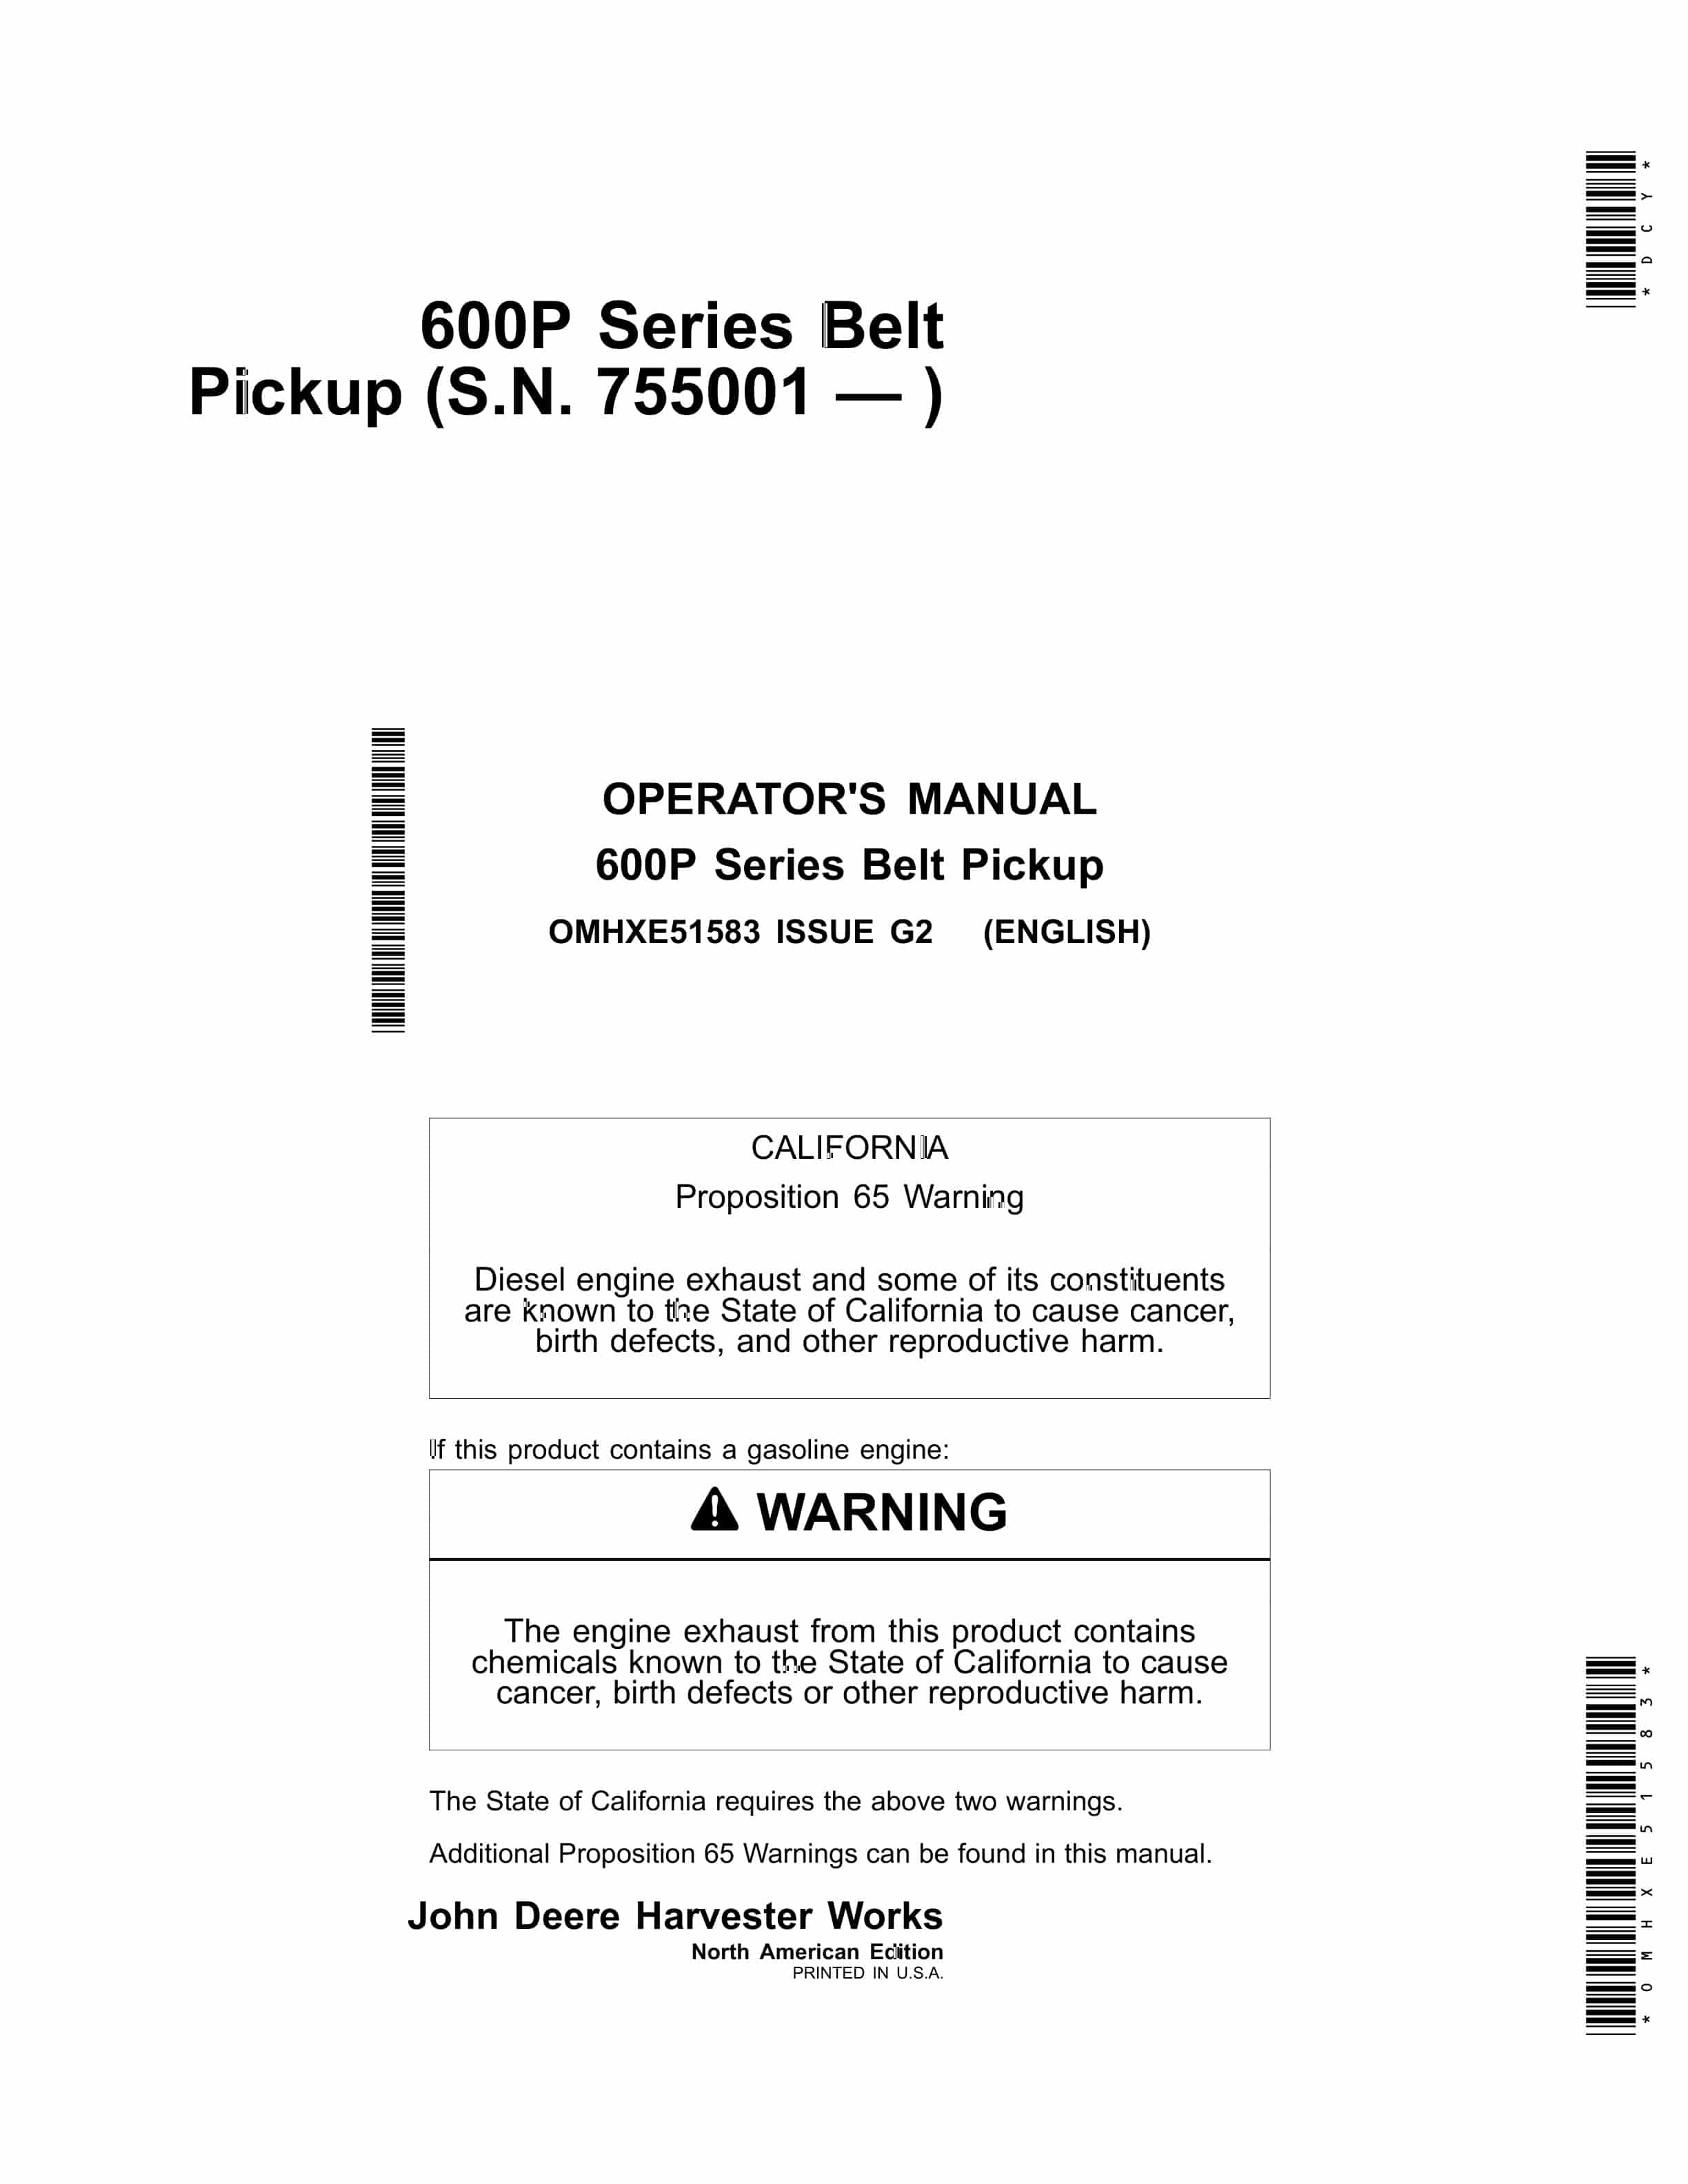 John Deere 600P Series Belt Pickup Operator Manual OMHXE51583 1